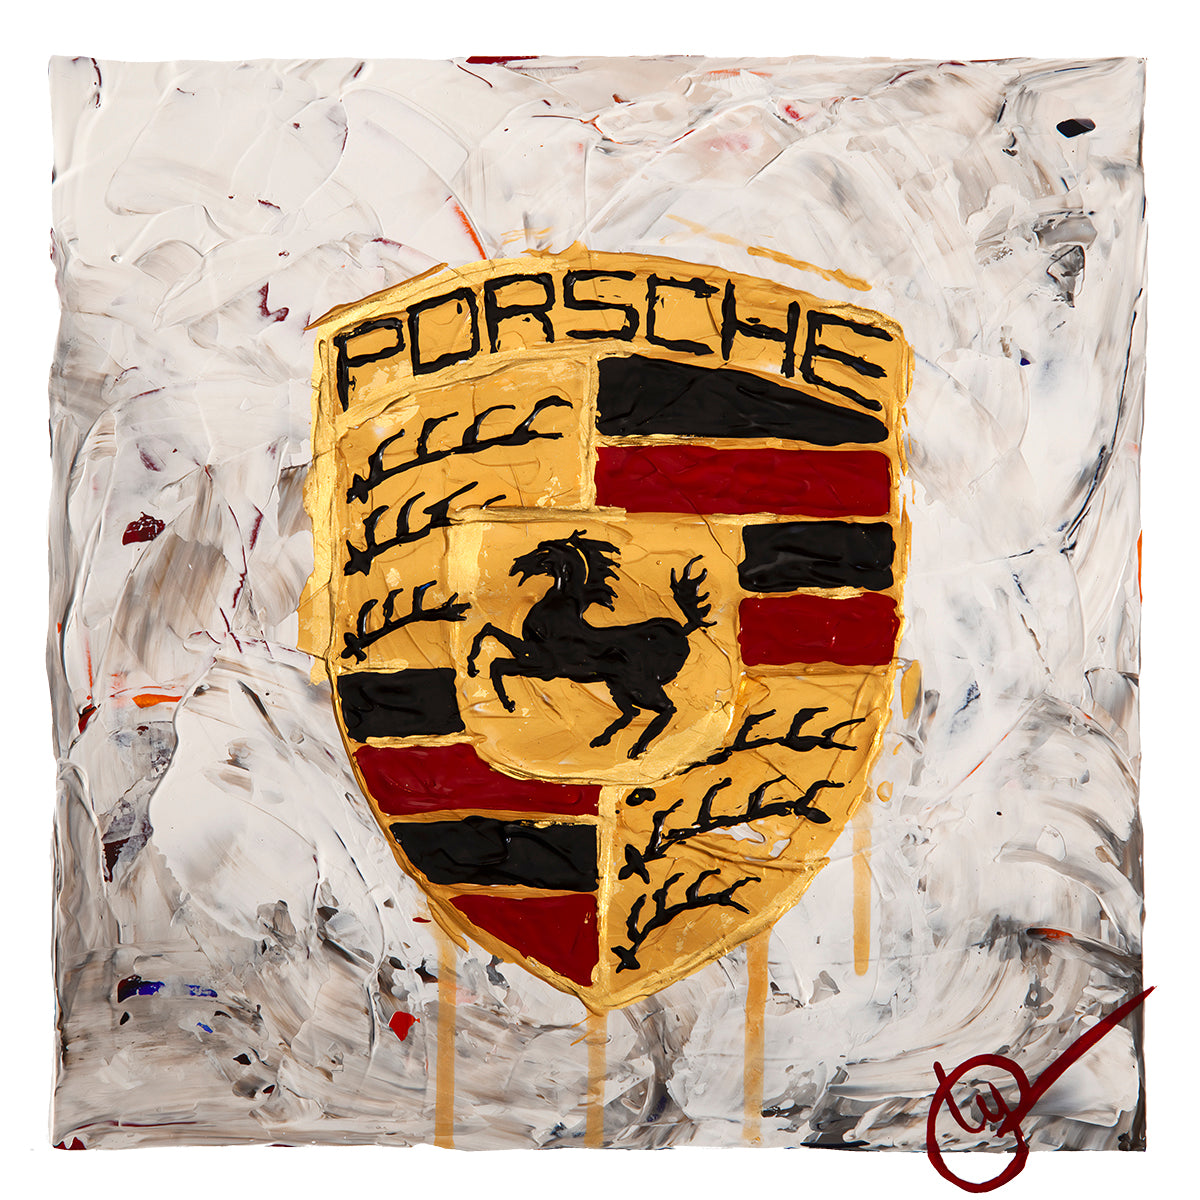 Porsche Emblem 23 - White